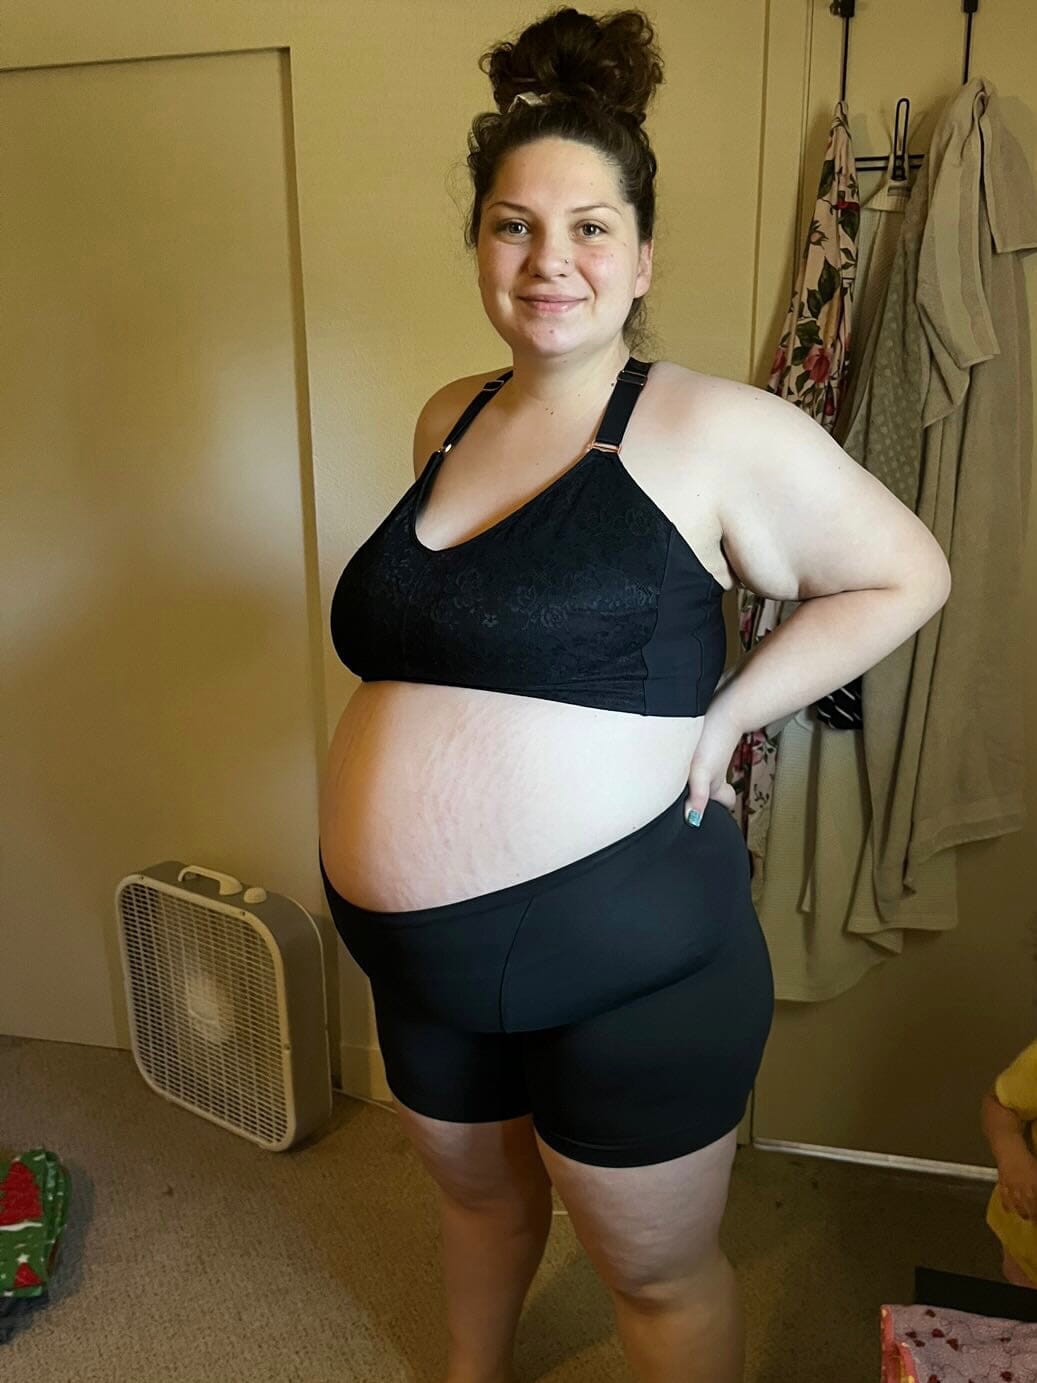 Plus-Sized plus Size Maternity Disposable Underwear Pregnant